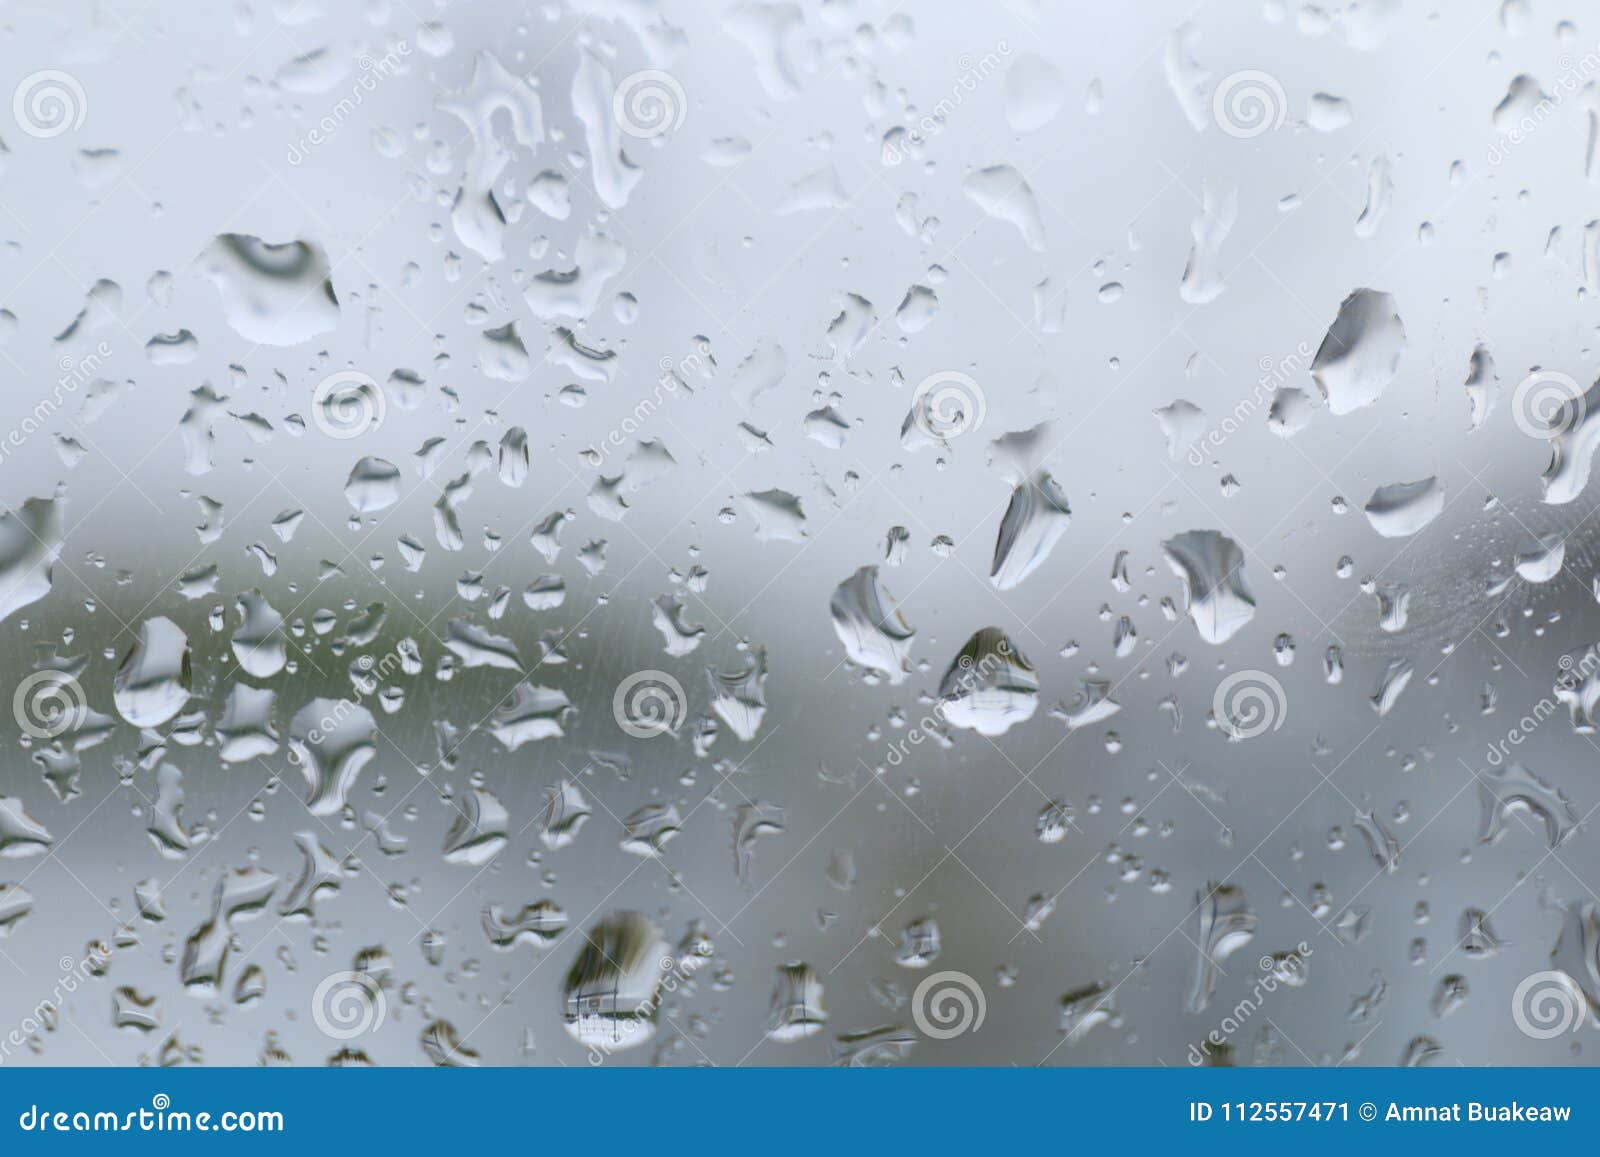 Water Drop On Glass Window And Rain Condensation Rainy Storm Season